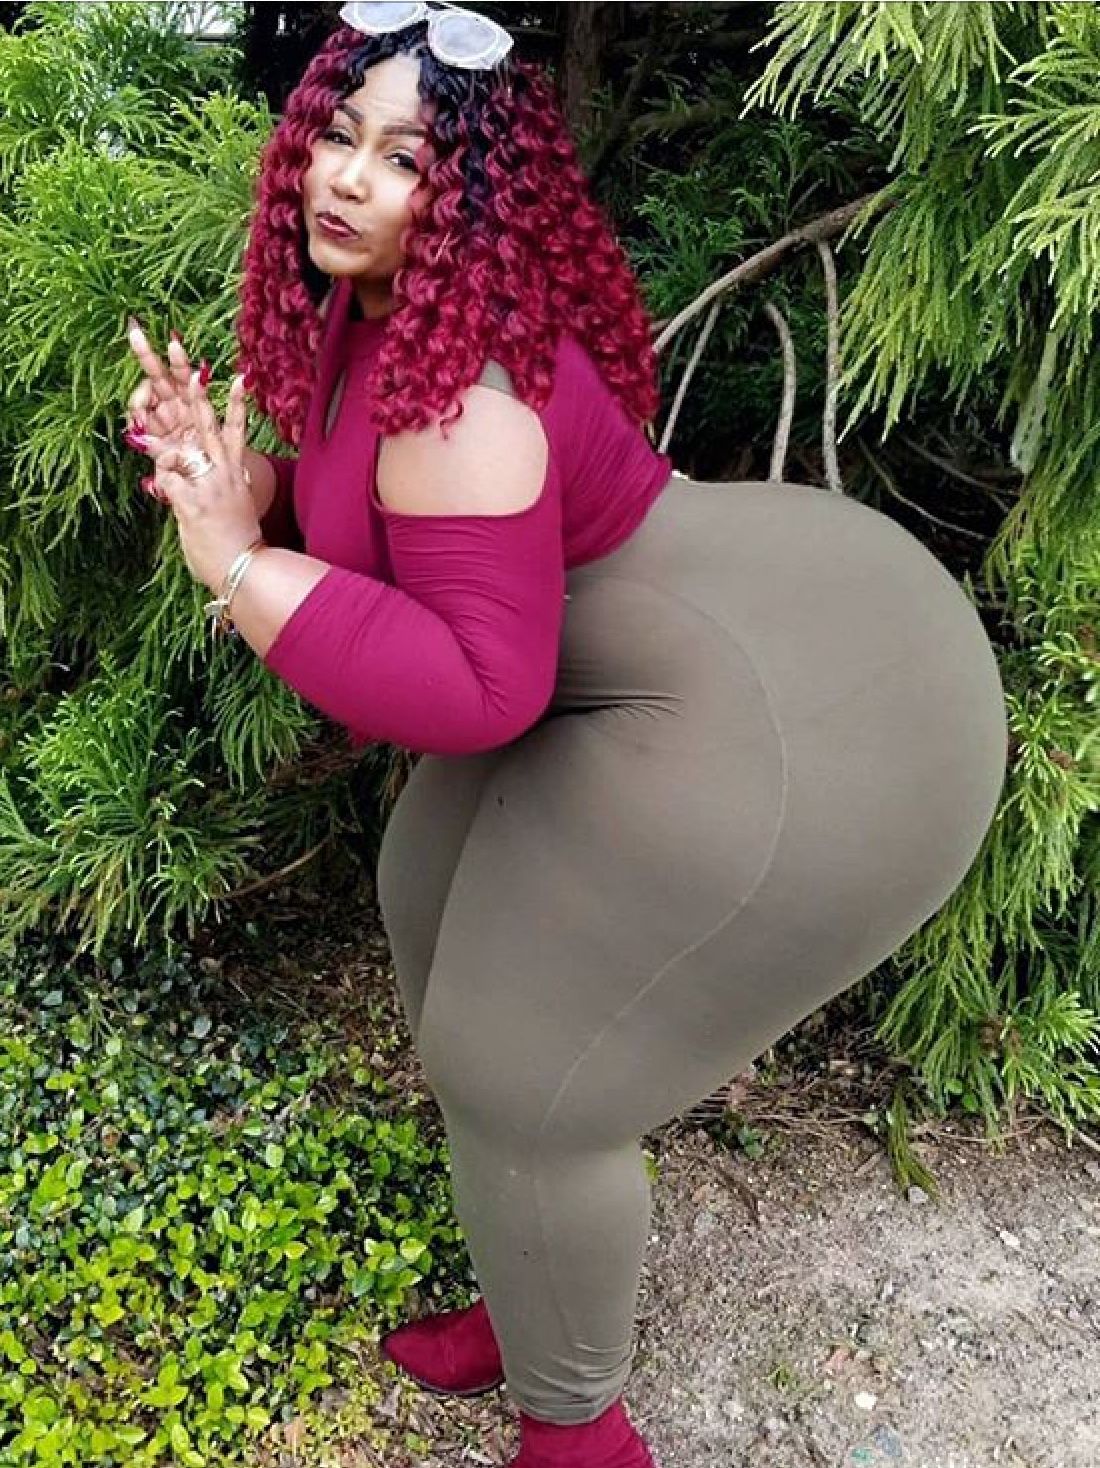 Bbw big fat ass woman